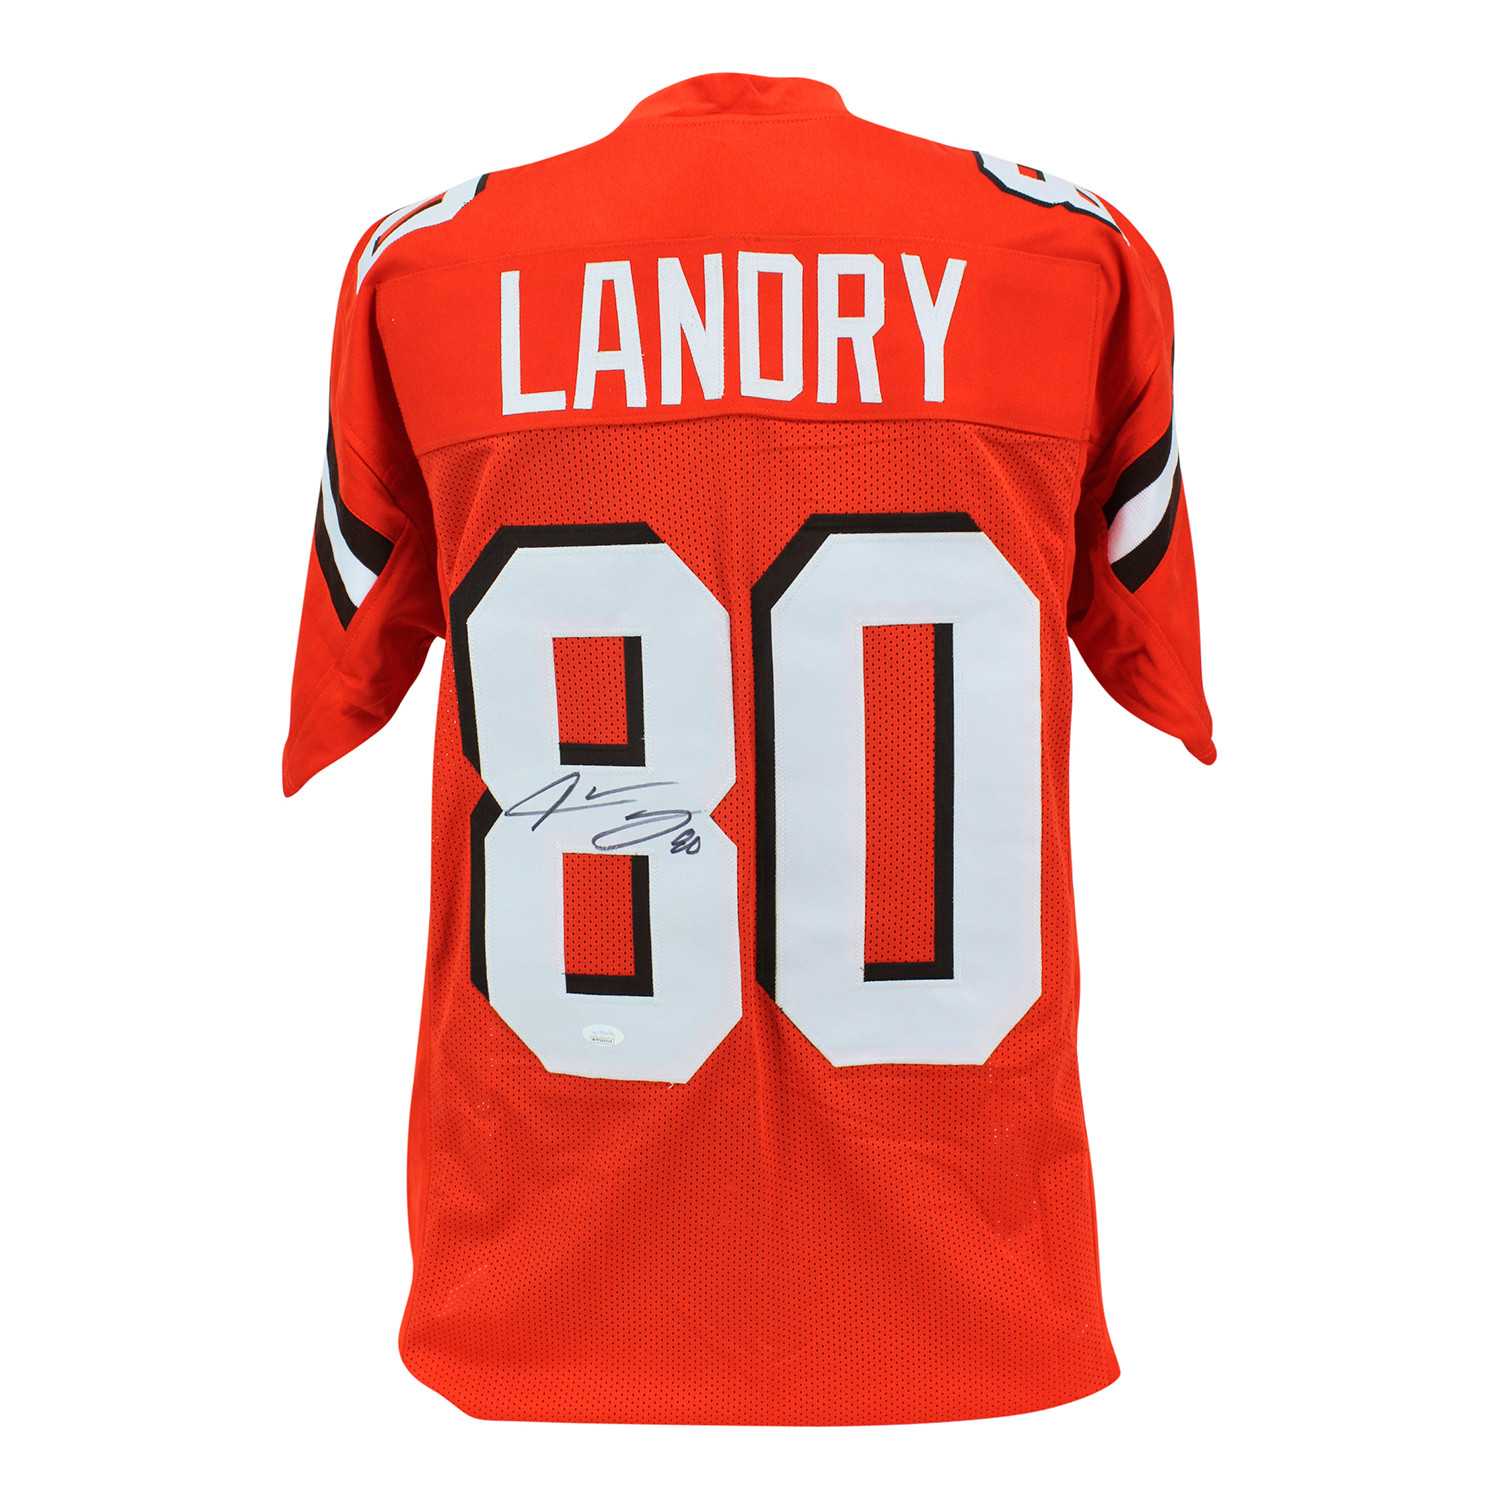 orange jarvis landry jersey